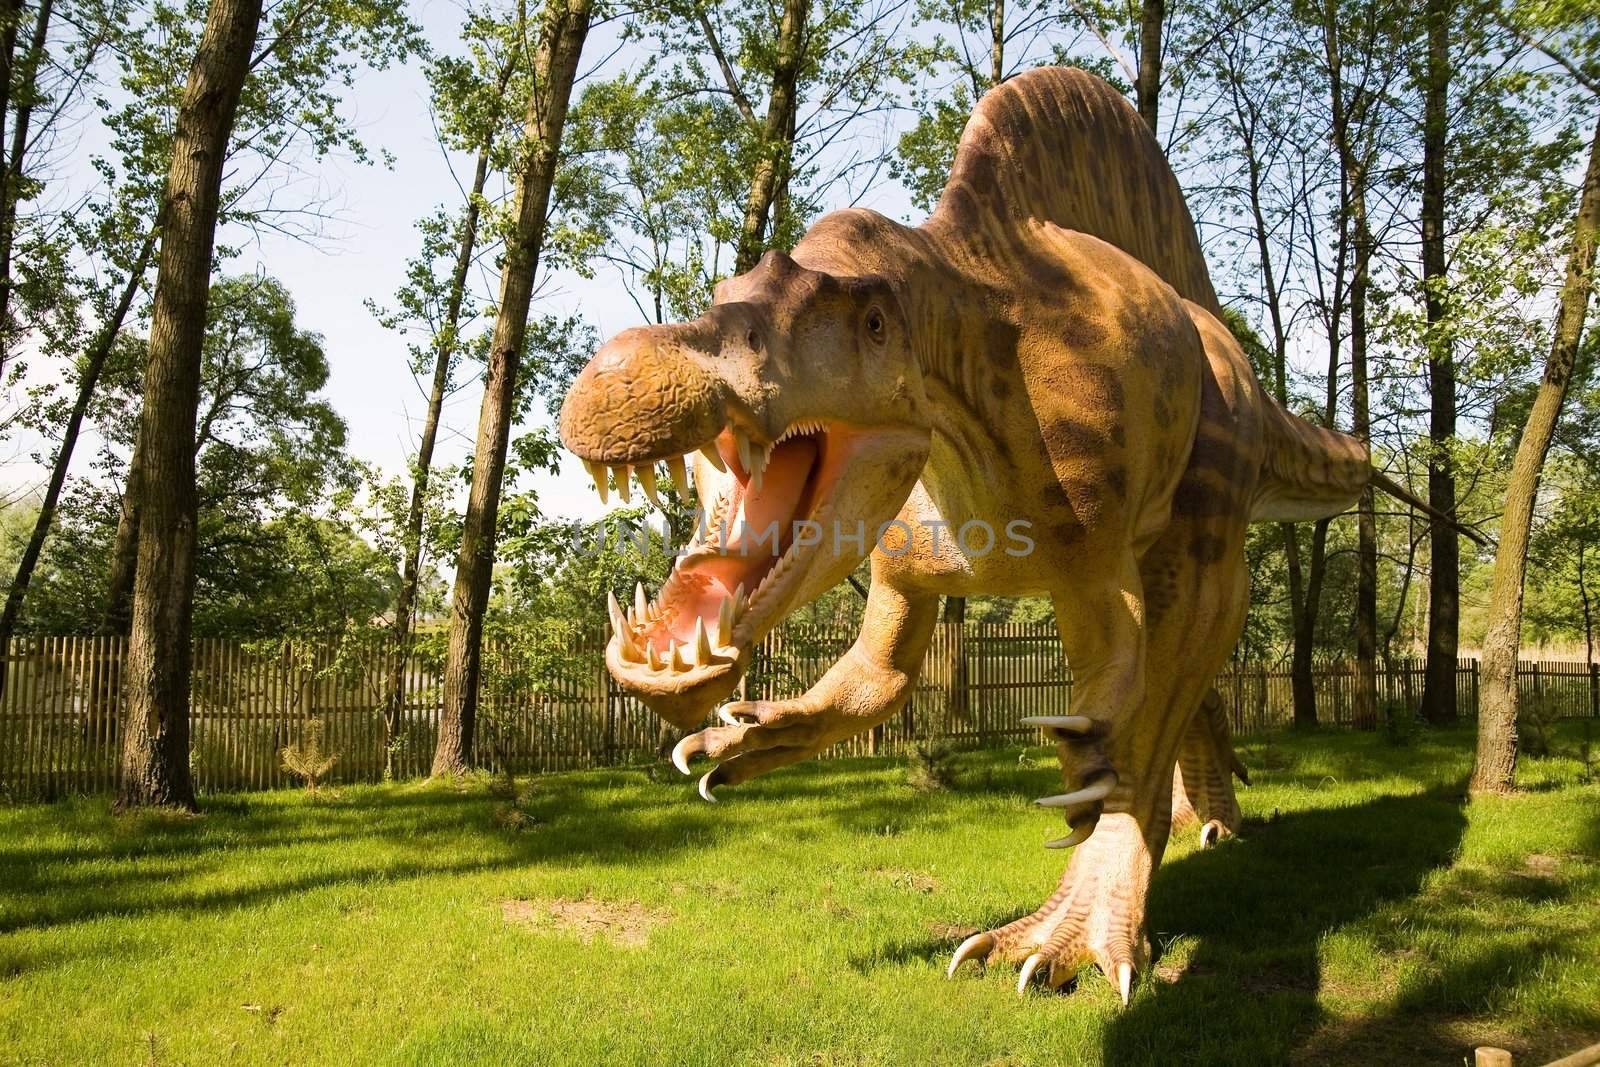 Jurassic park - set of dinosaurs - Spinosaurus aegyptiacus